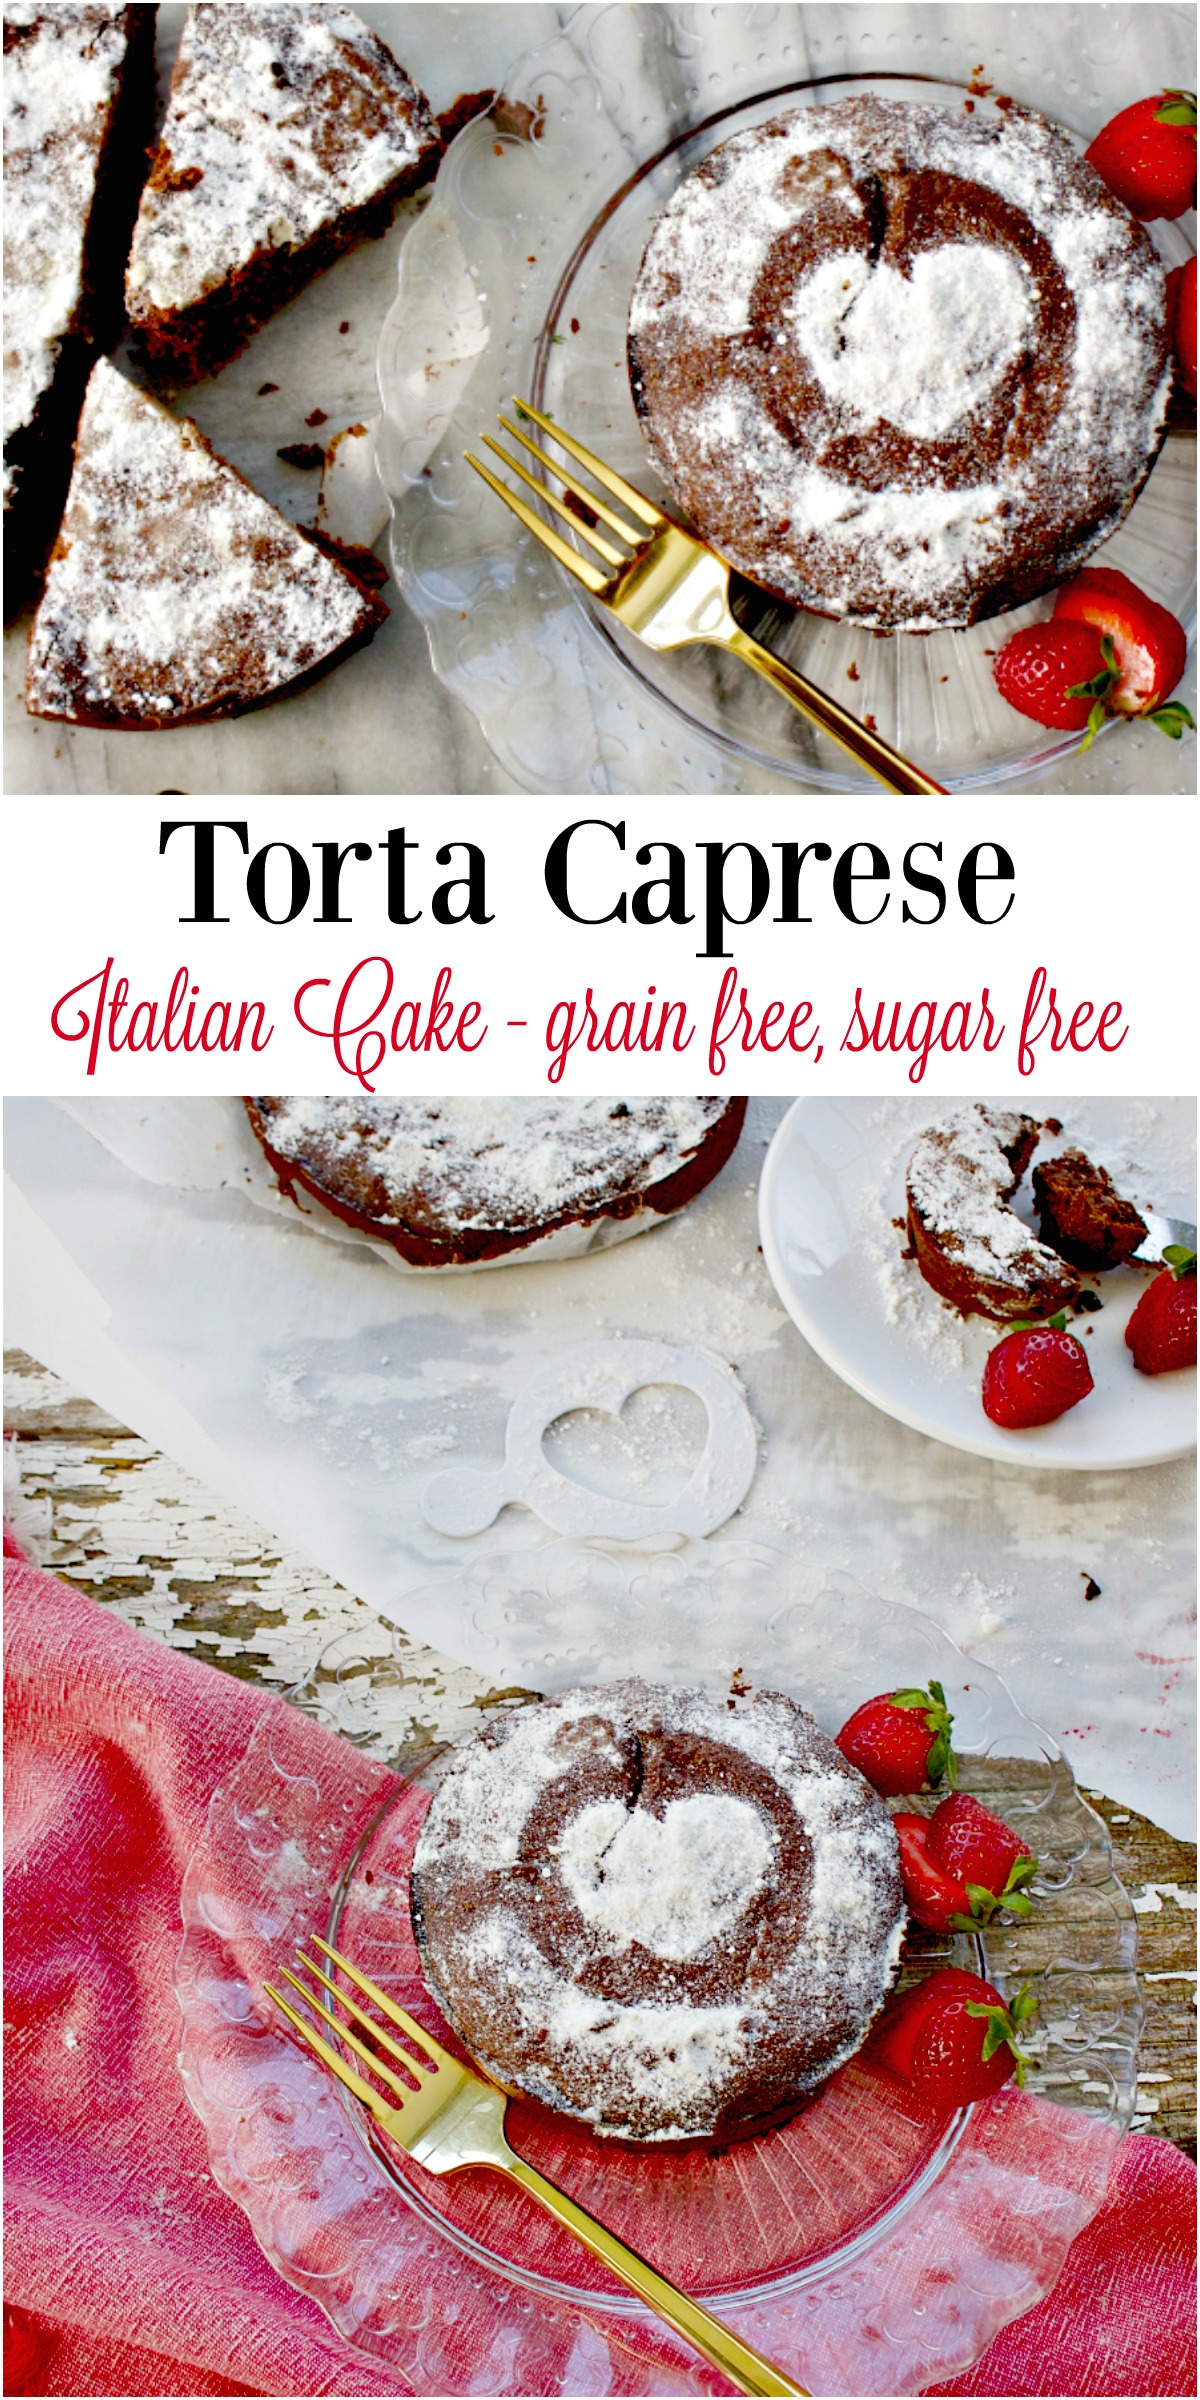 Torta Caprese, Chocolate Almond Flour Cake, Gluten Free from Spinach Tiger